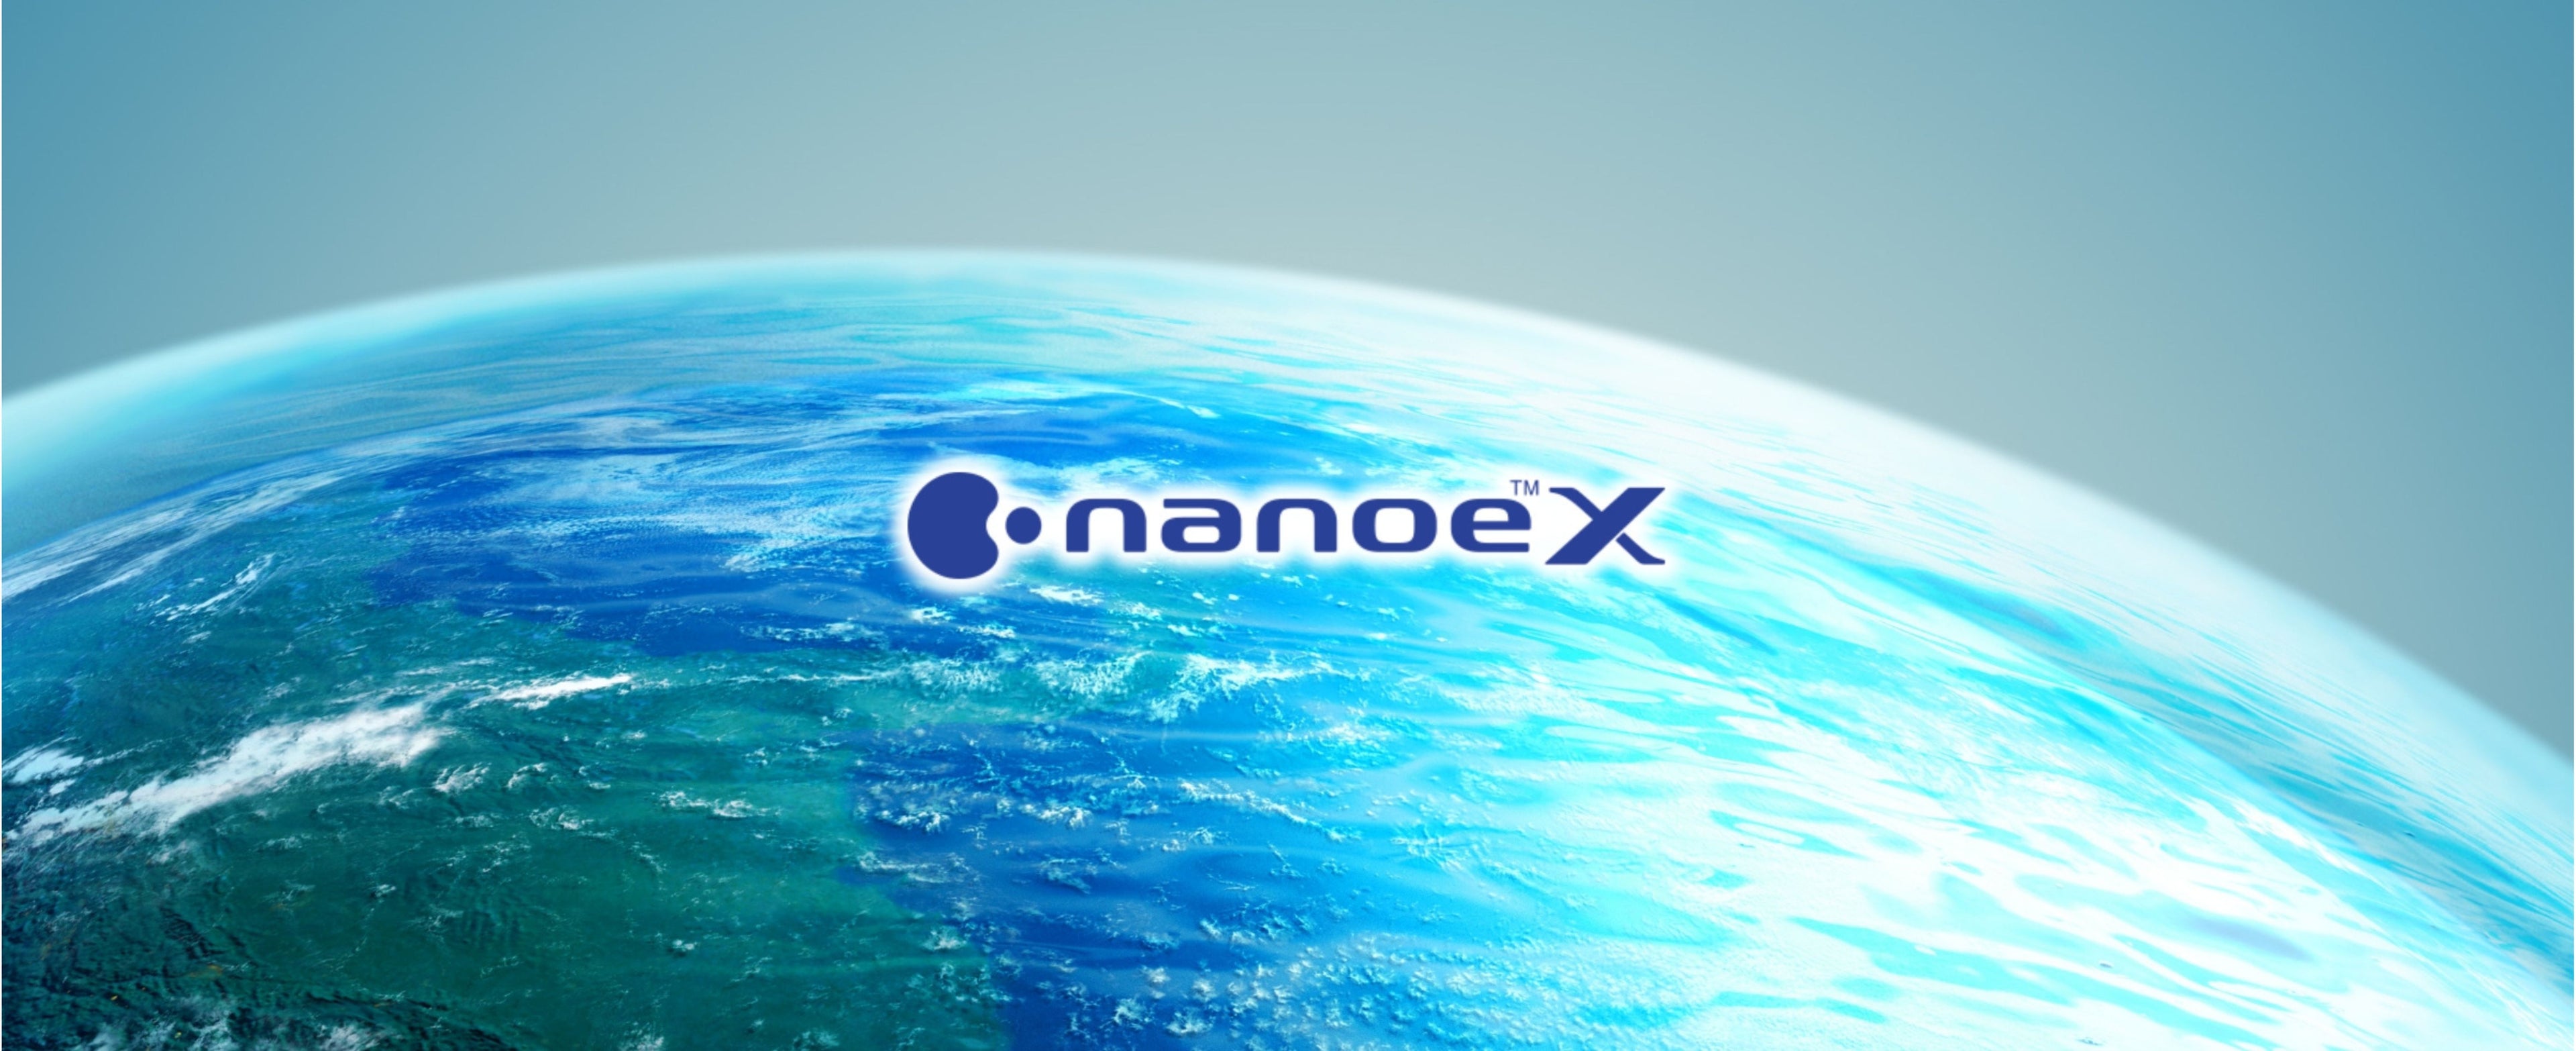 Panasonic NanoeX Technology Banner